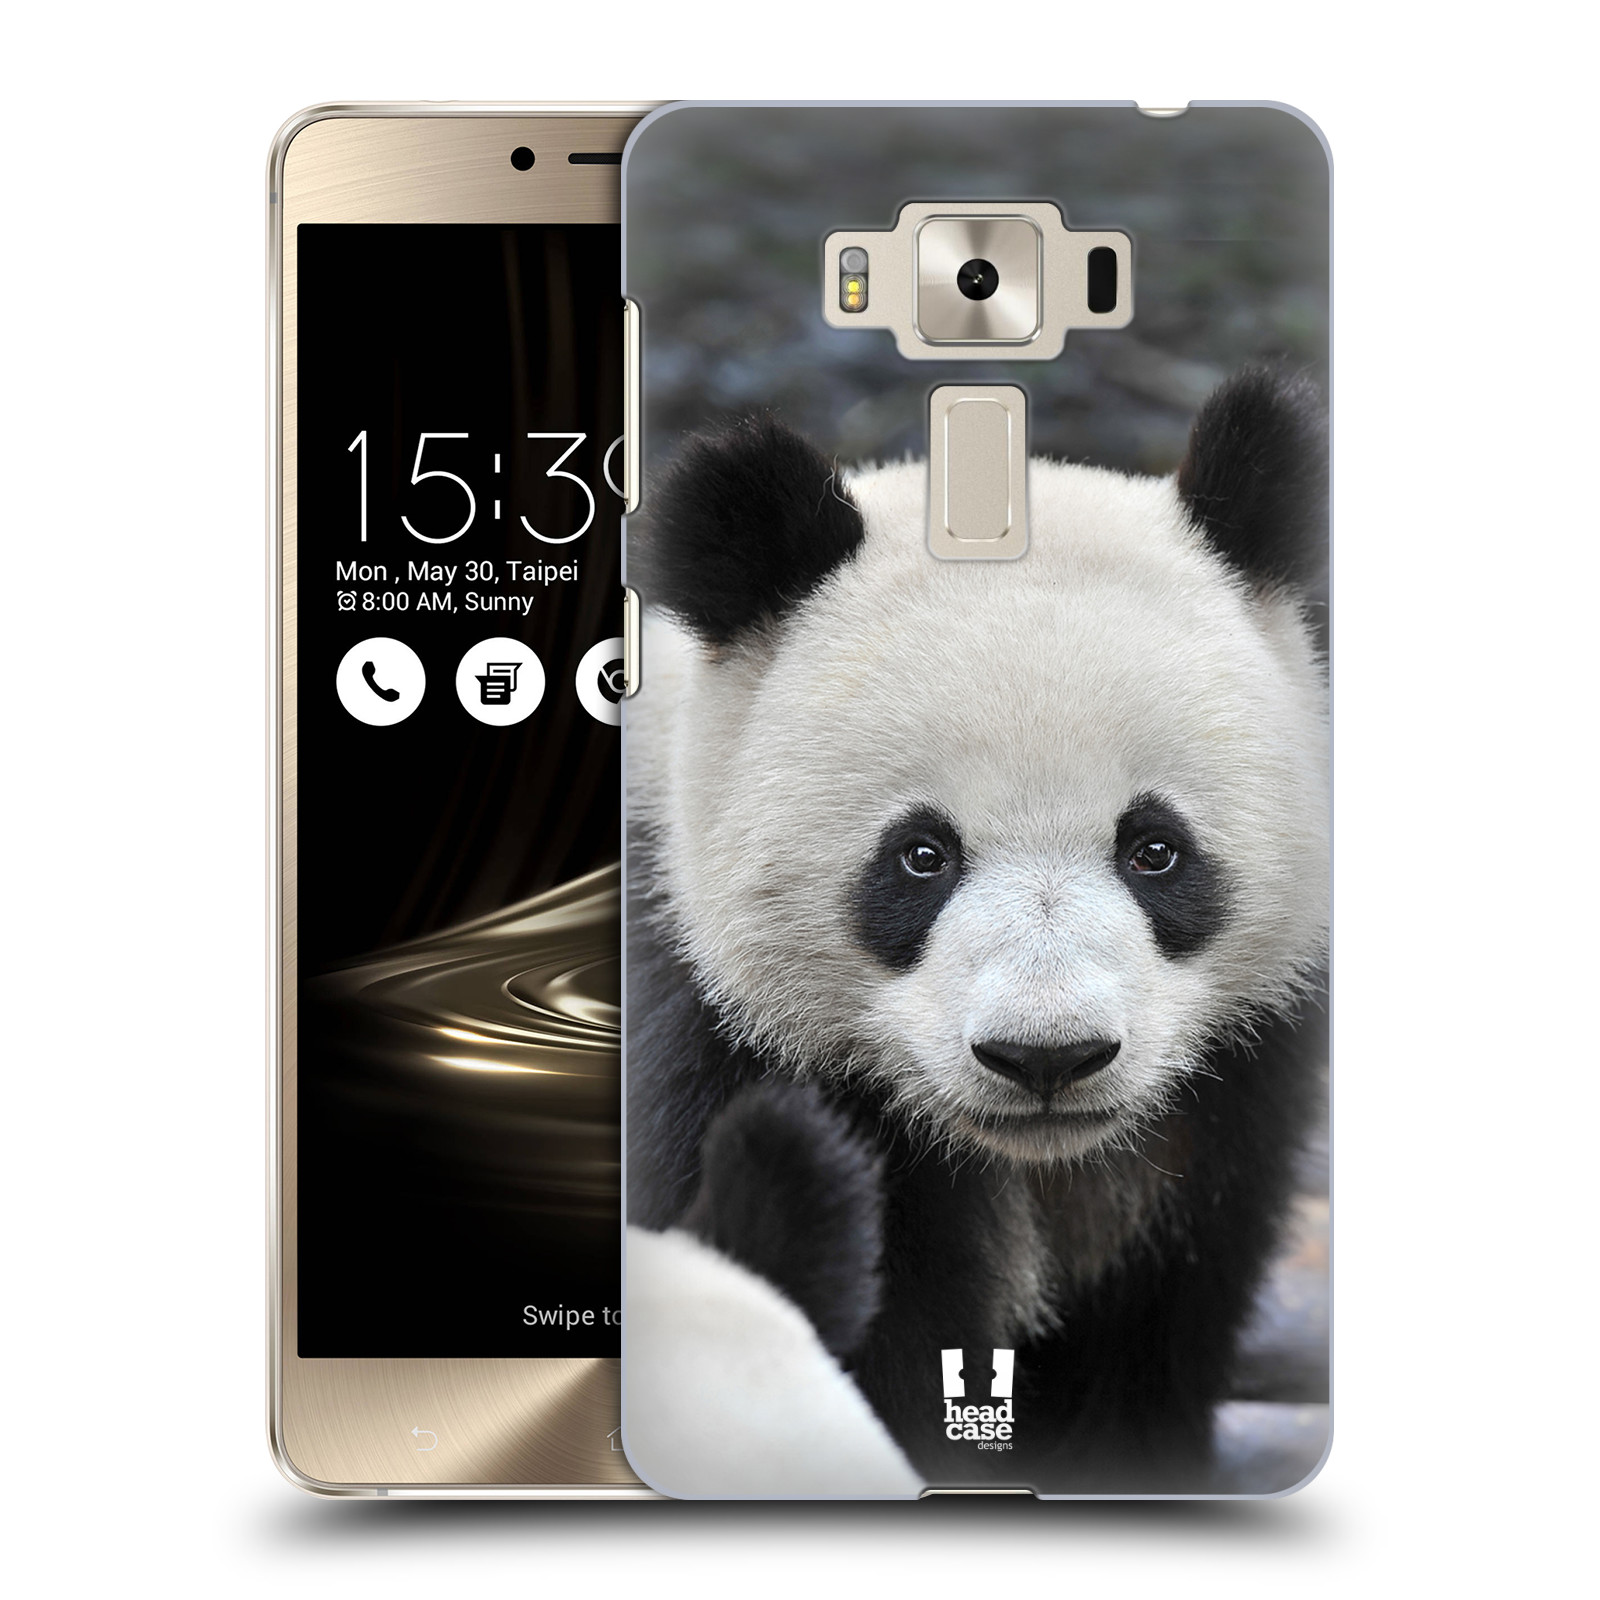 HEAD CASE plastový obal na mobil Asus Zenfone 3 DELUXE ZS550KL vzor Divočina, Divoký život a zvířata foto MEDVĚD PANDA